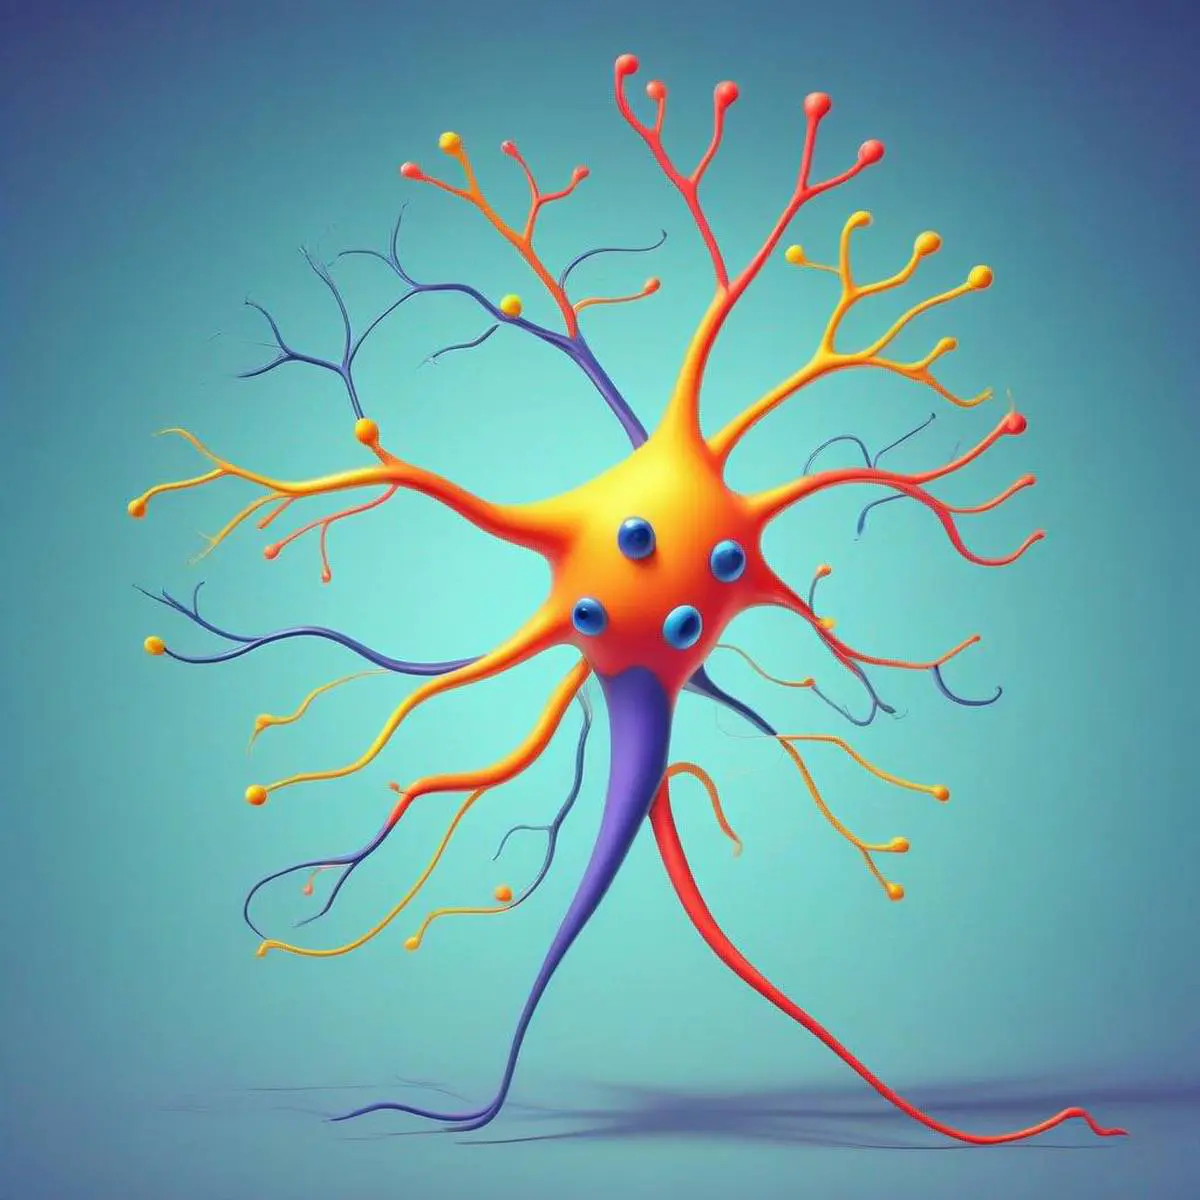 Neuron puns